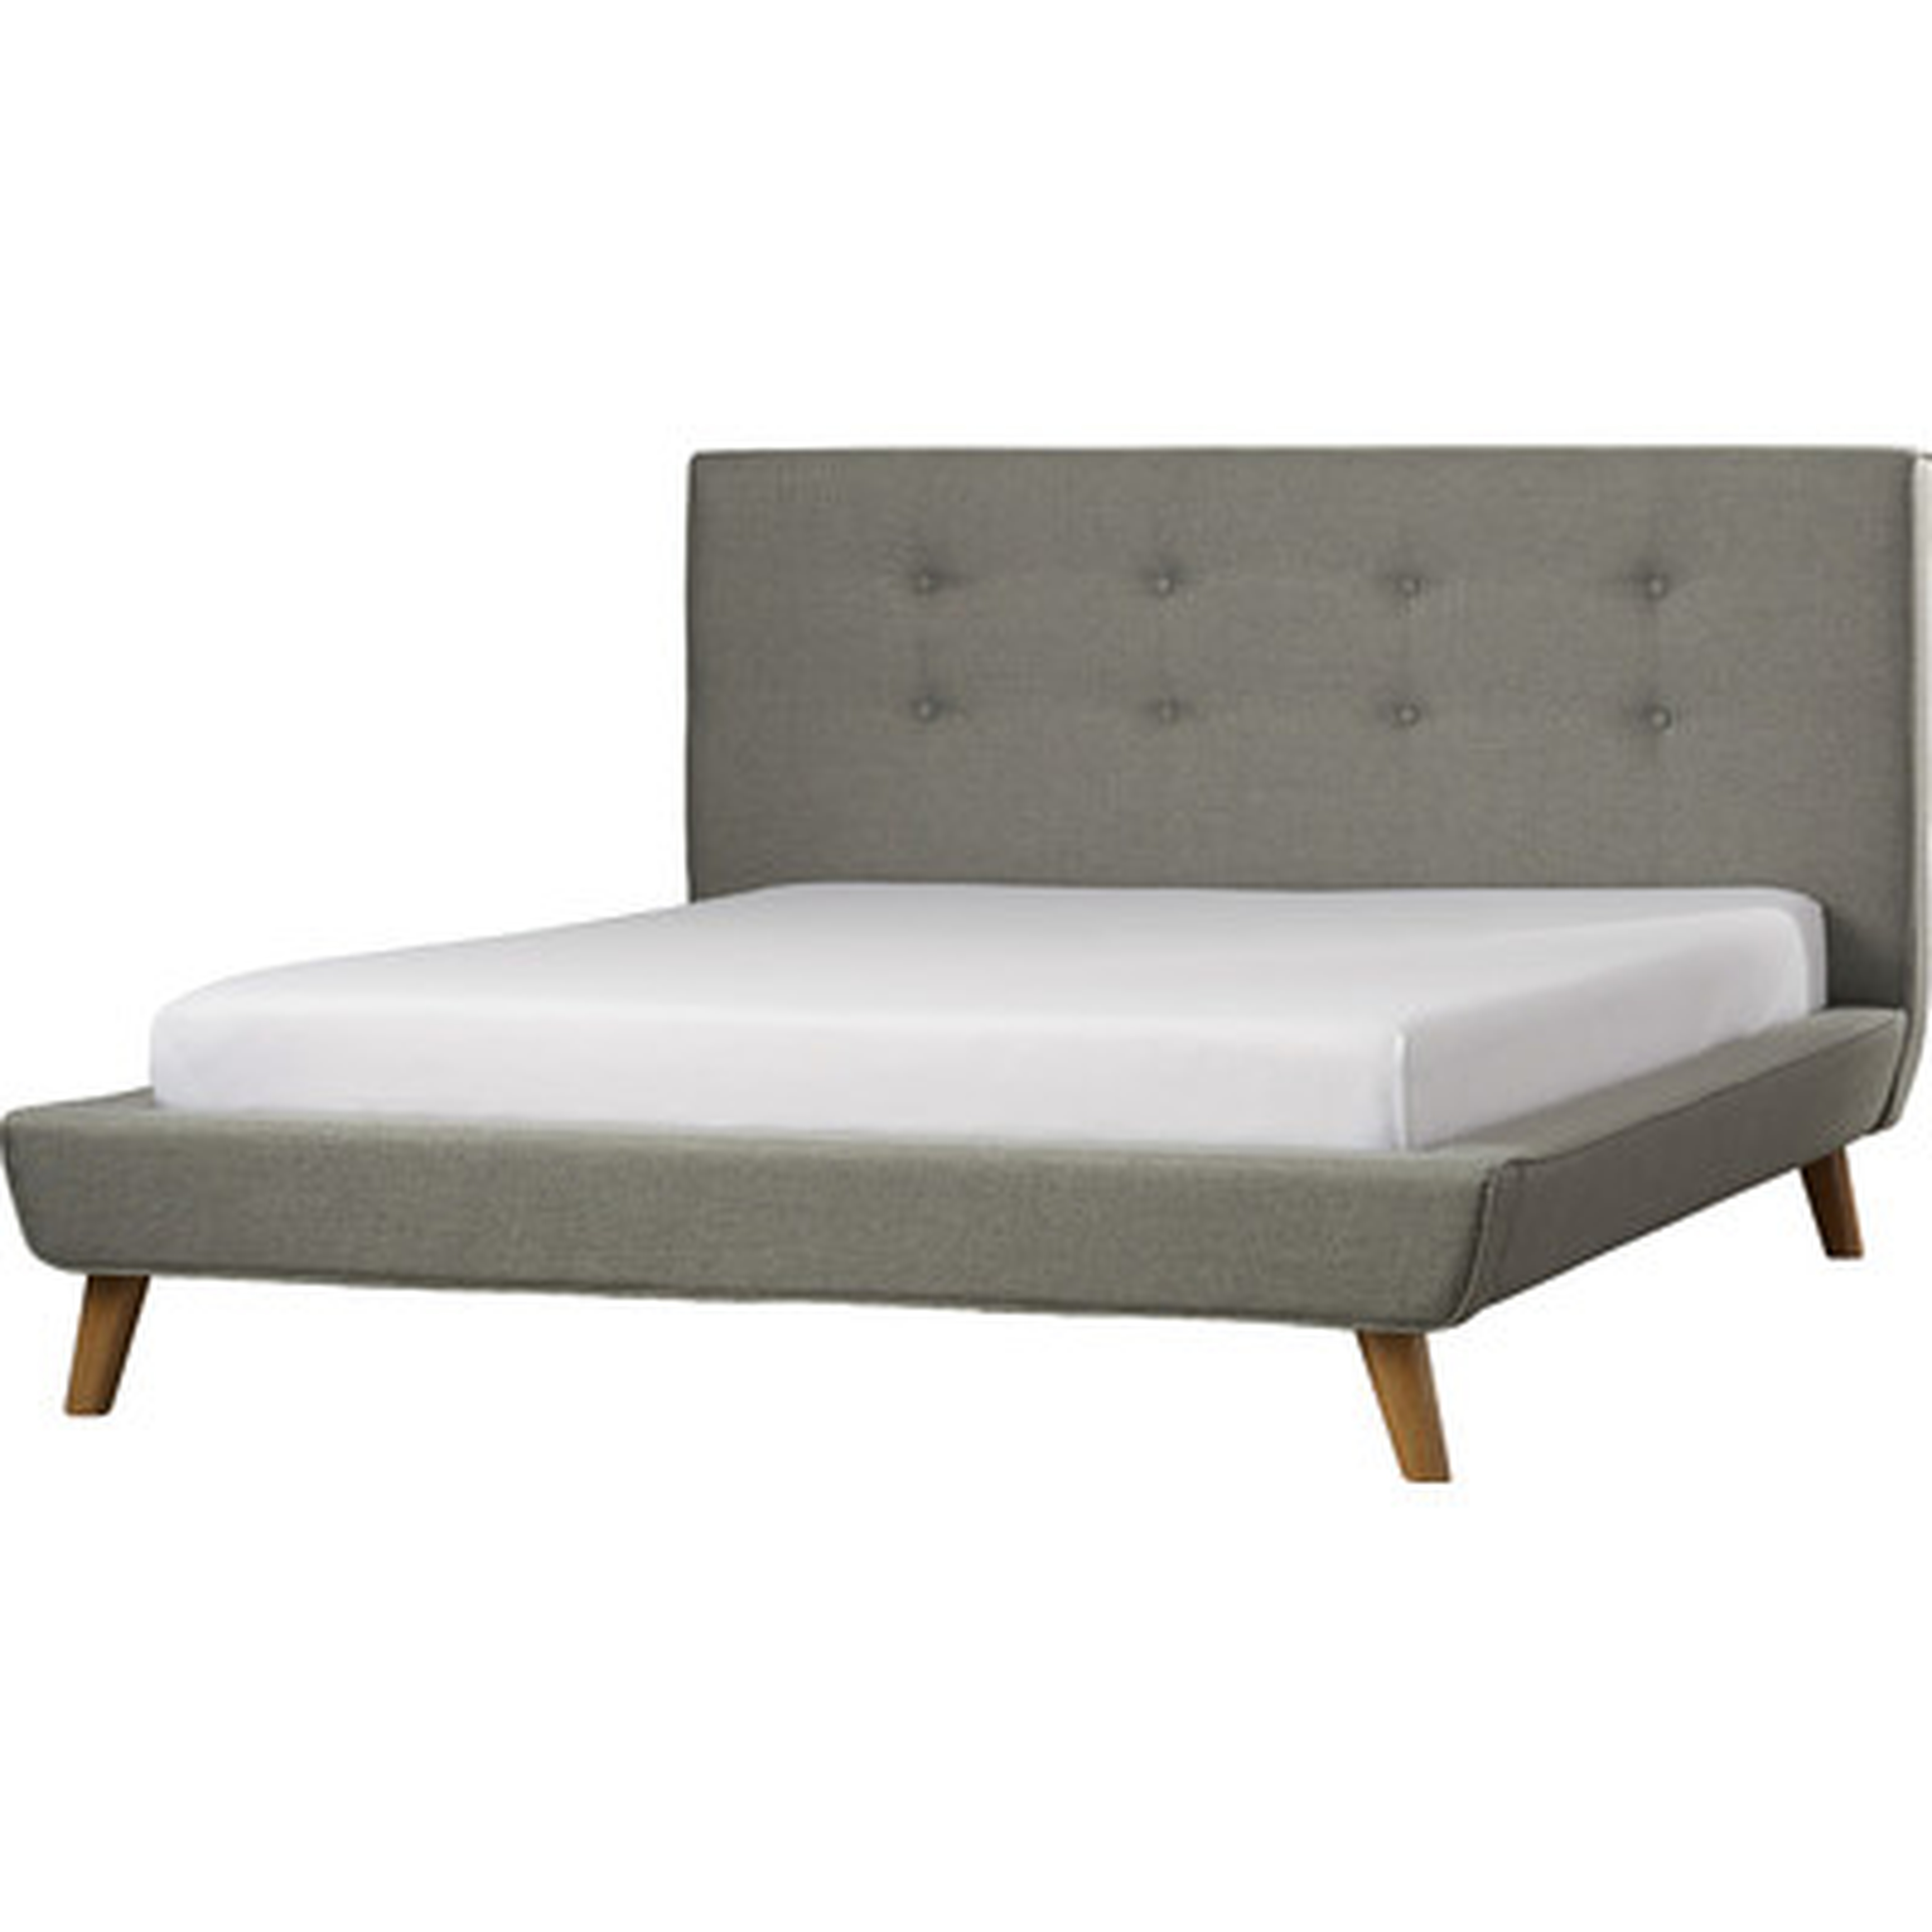 Rasmussen Upholstered Platform Bed, Grey - King - Wayfair